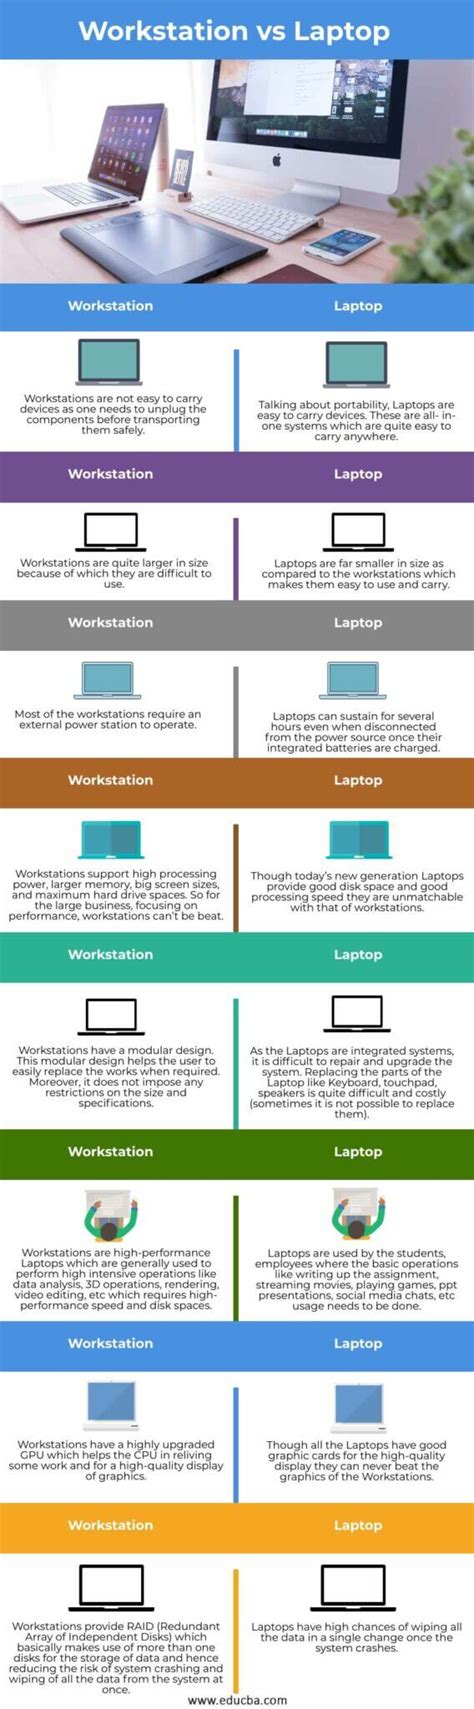 Workstation Vs Laptop Top Differences Of Workstation Vs Laptop